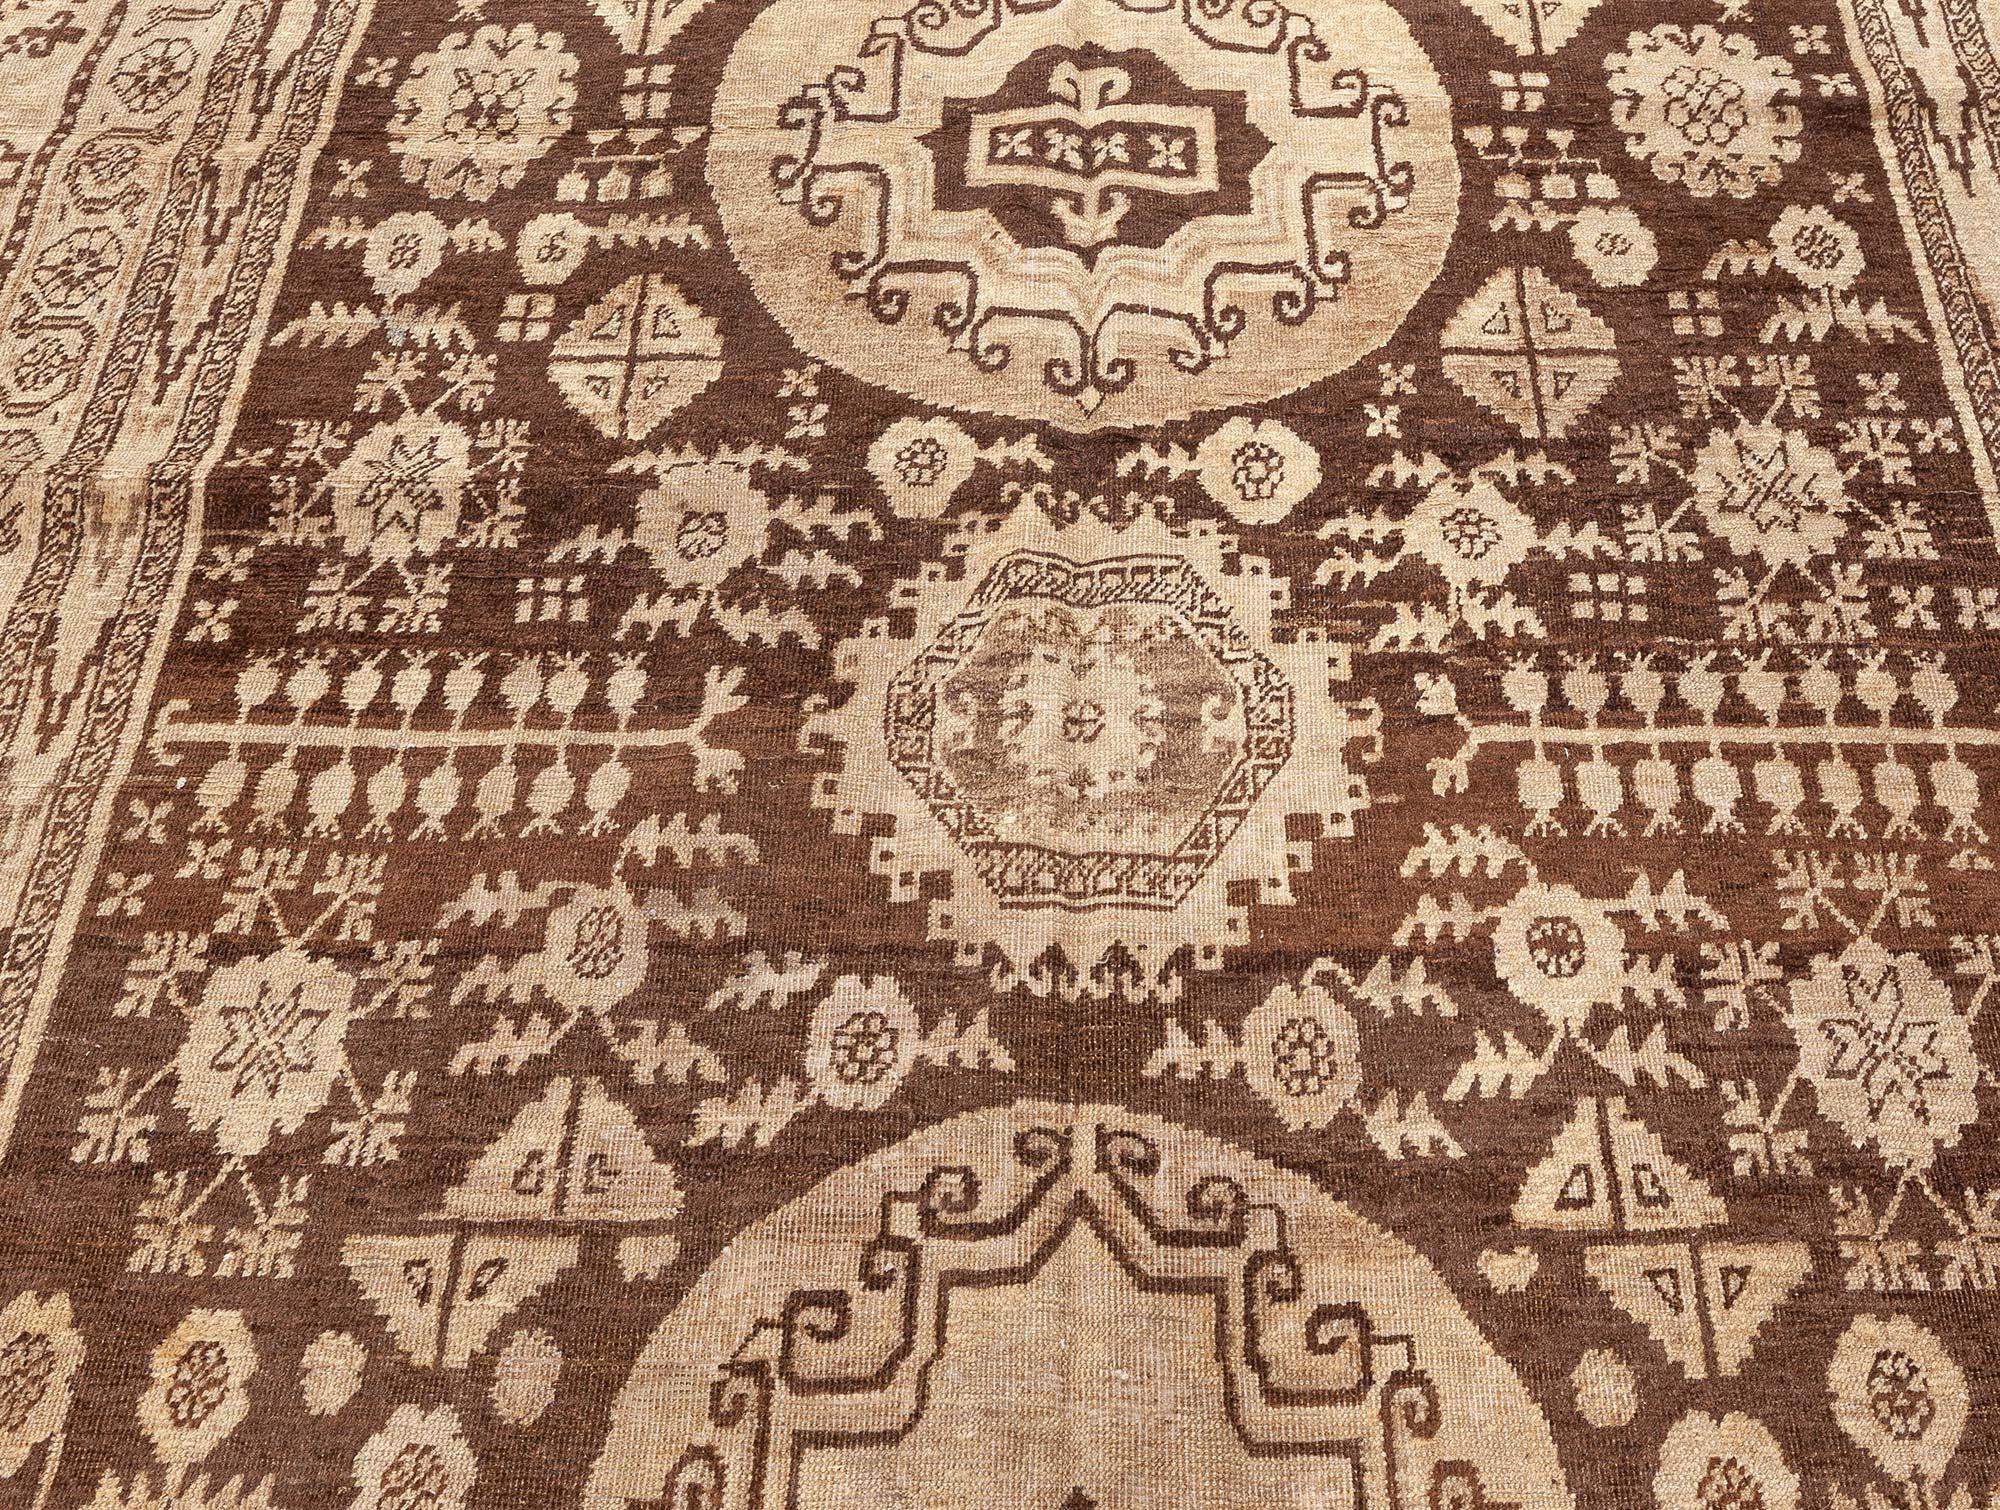 Midcentury Samarkand handmade wool rug.
Size: 6'7